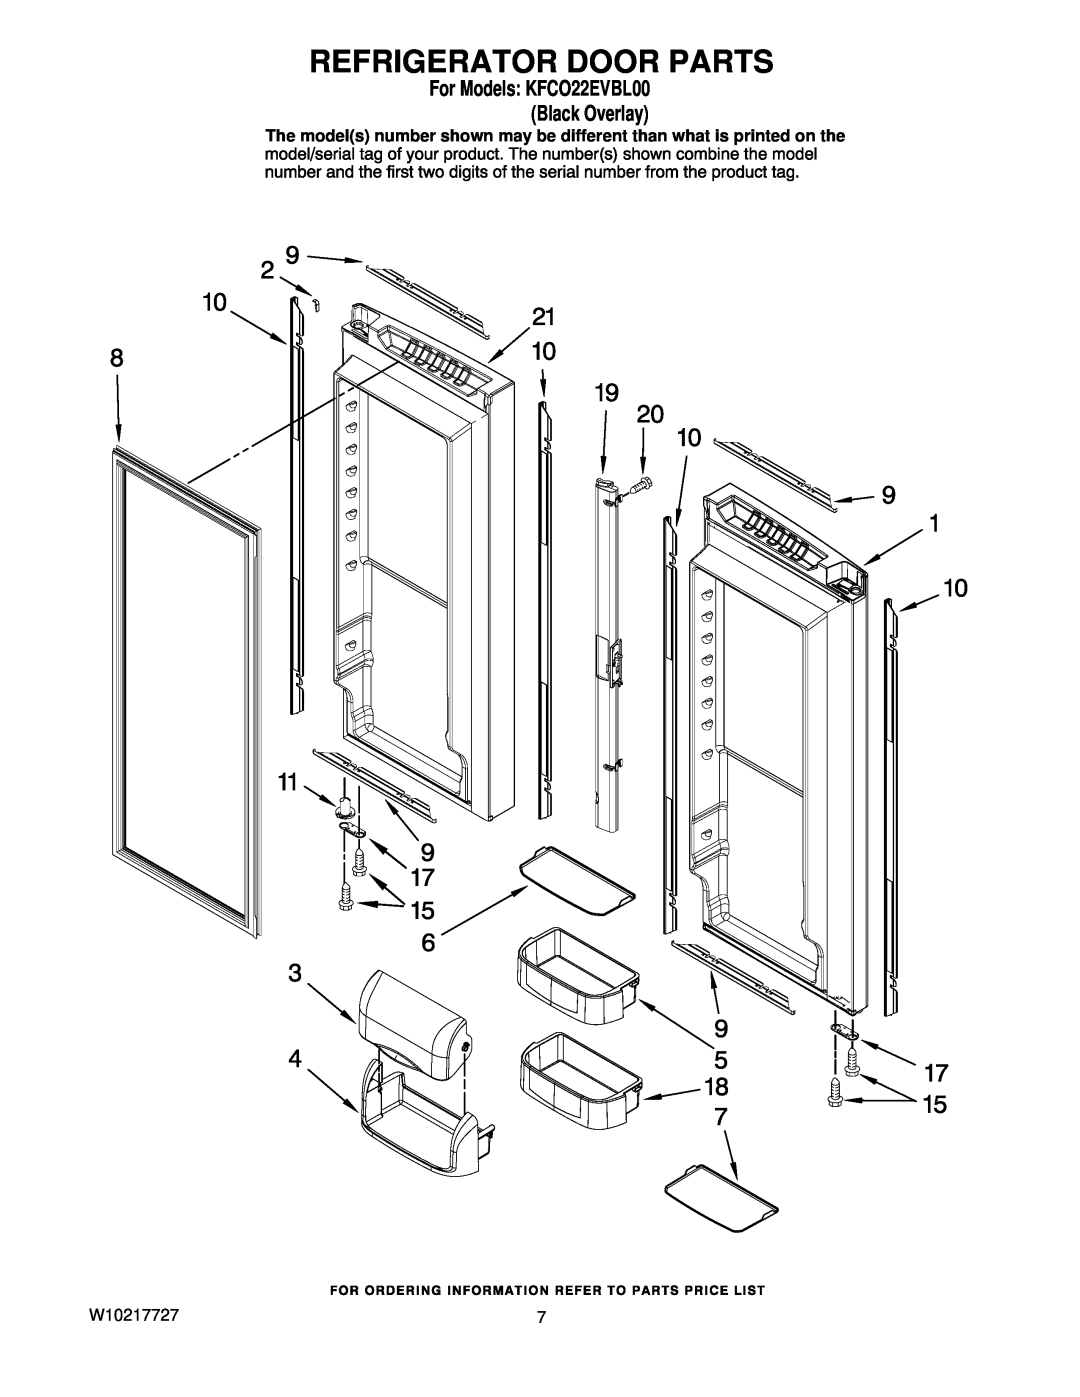 KitchenAid manual Refrigerator Door Parts, For Models KFCO22EVBL00 Black Overlay 